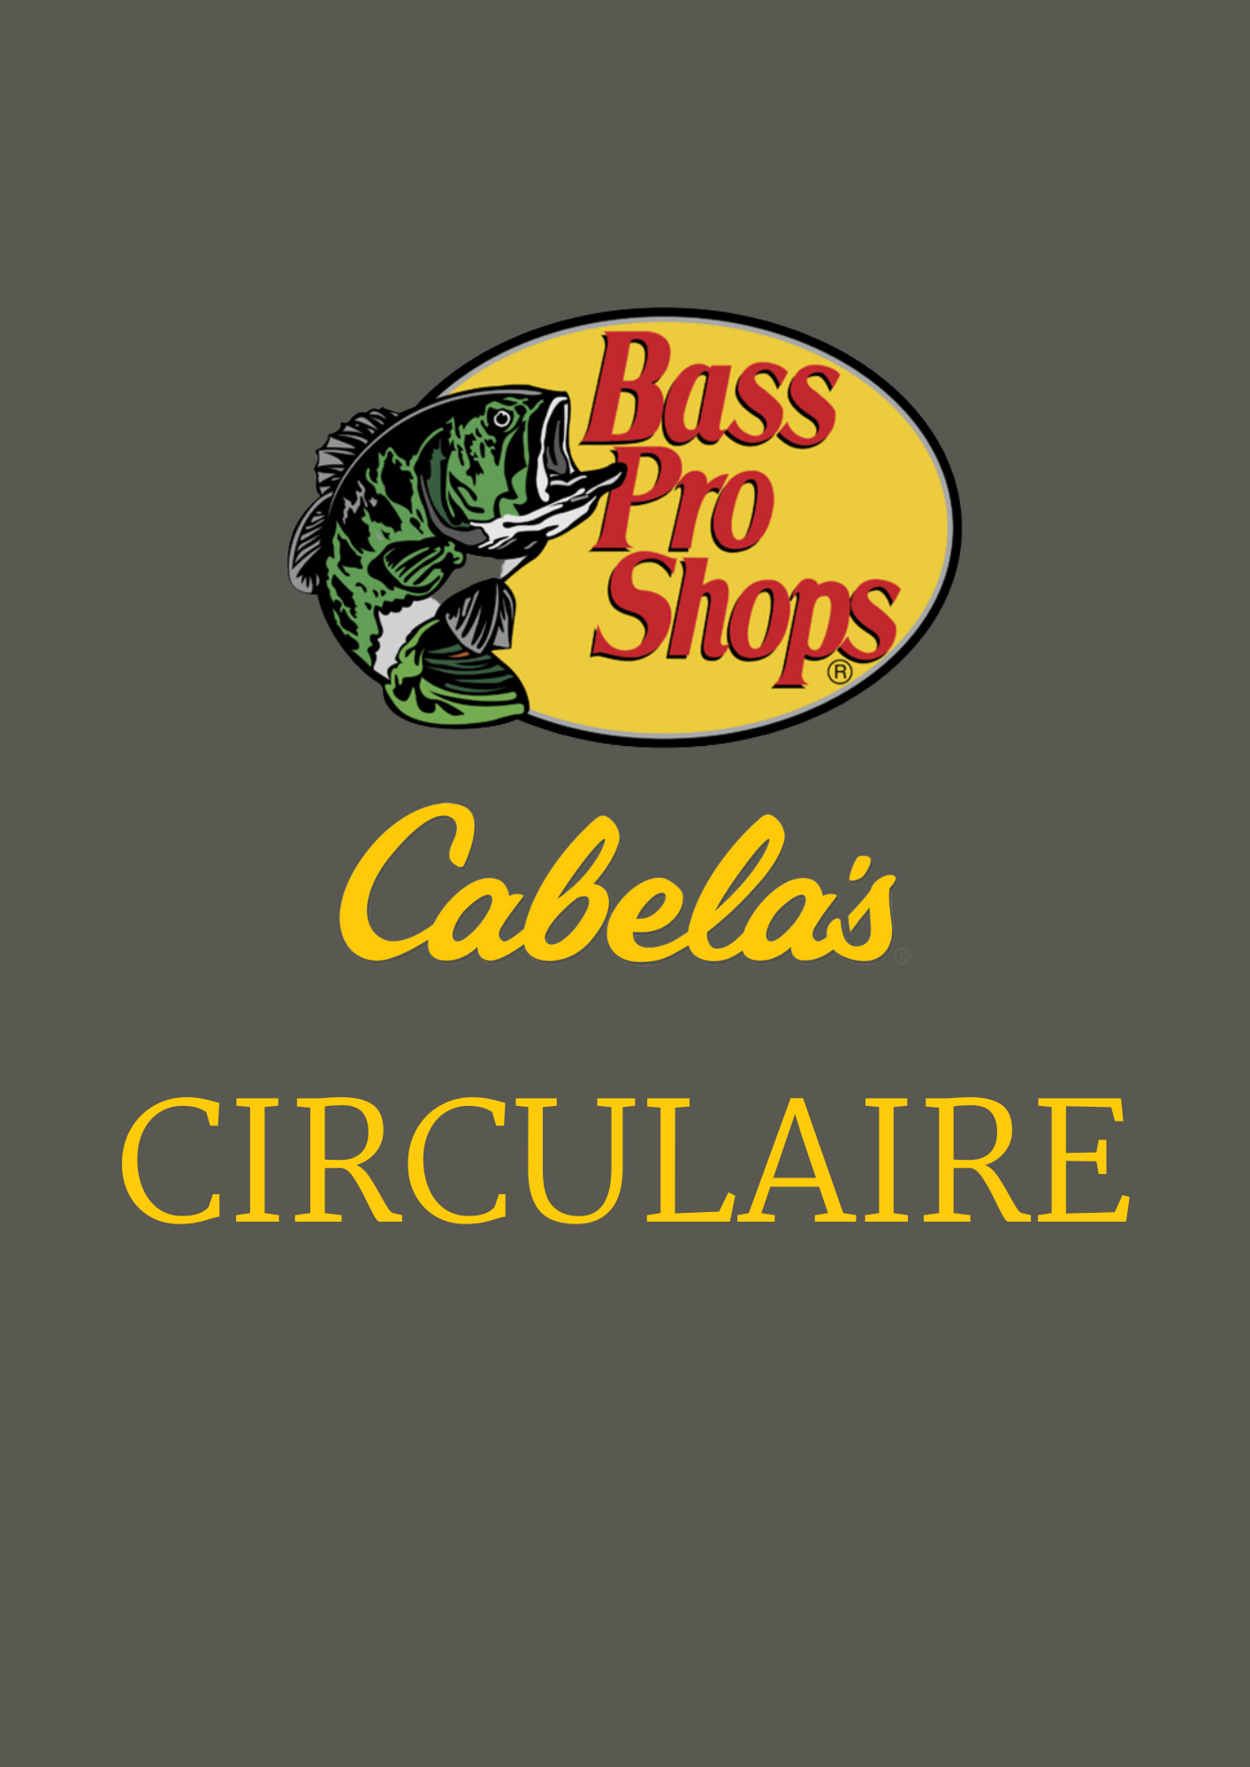 Bass Pro Shops Circulaires